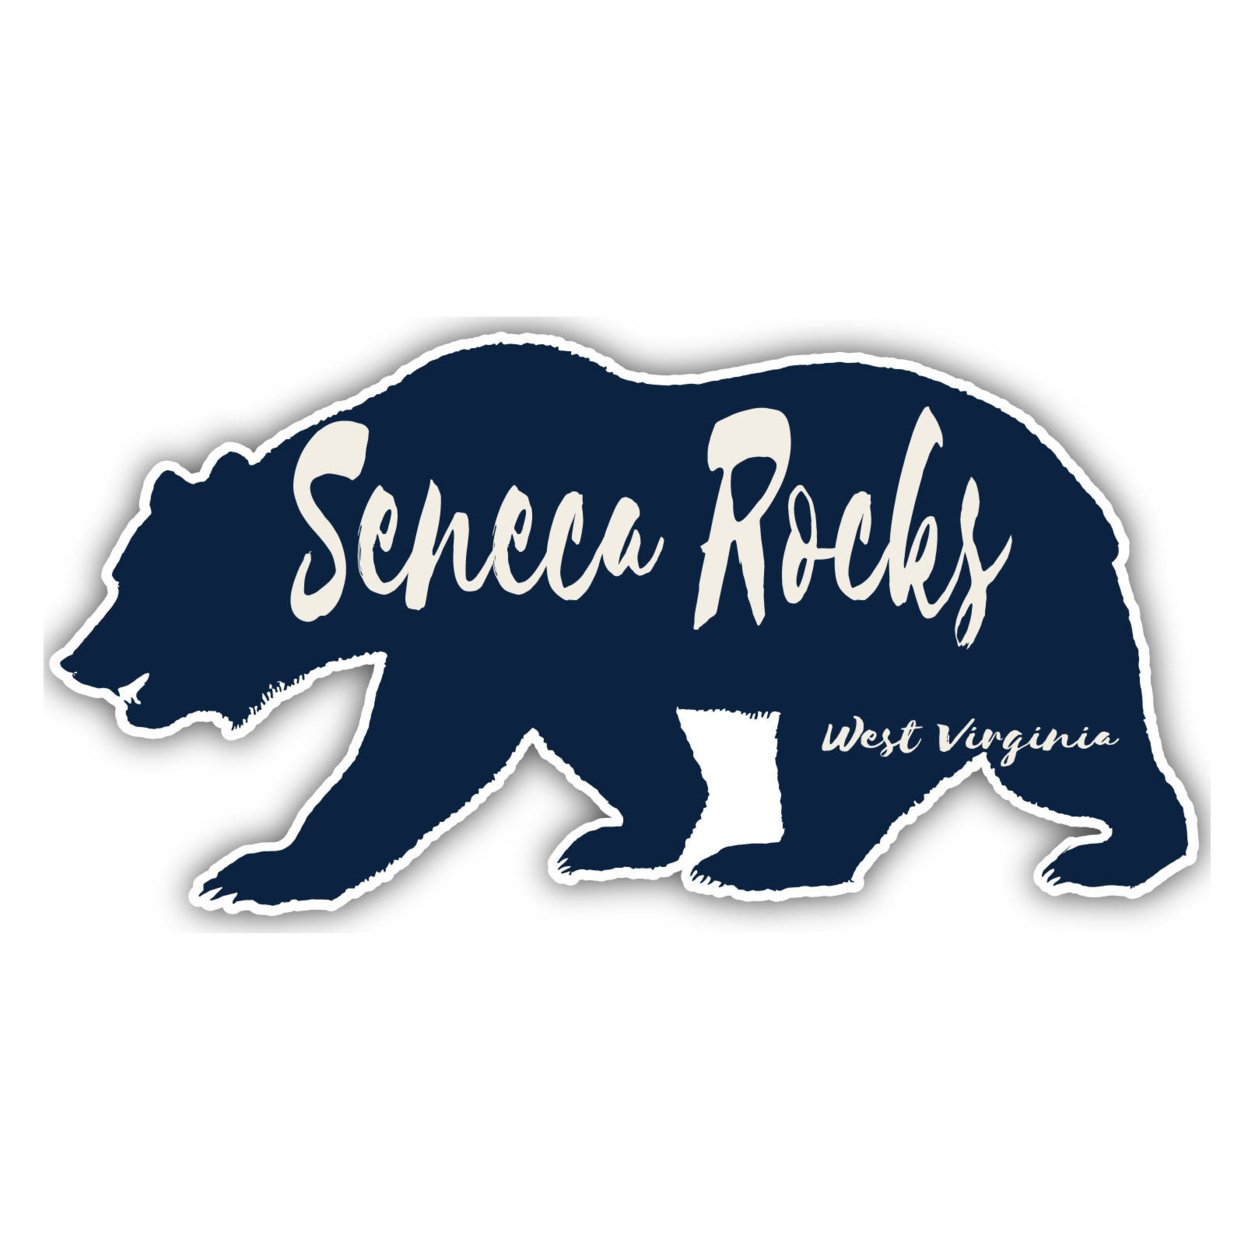 Seneca Rocks West Virginia Souvenir Decorative Stickers (Choose Theme And Size) - Single Unit, 4-Inch, Bear